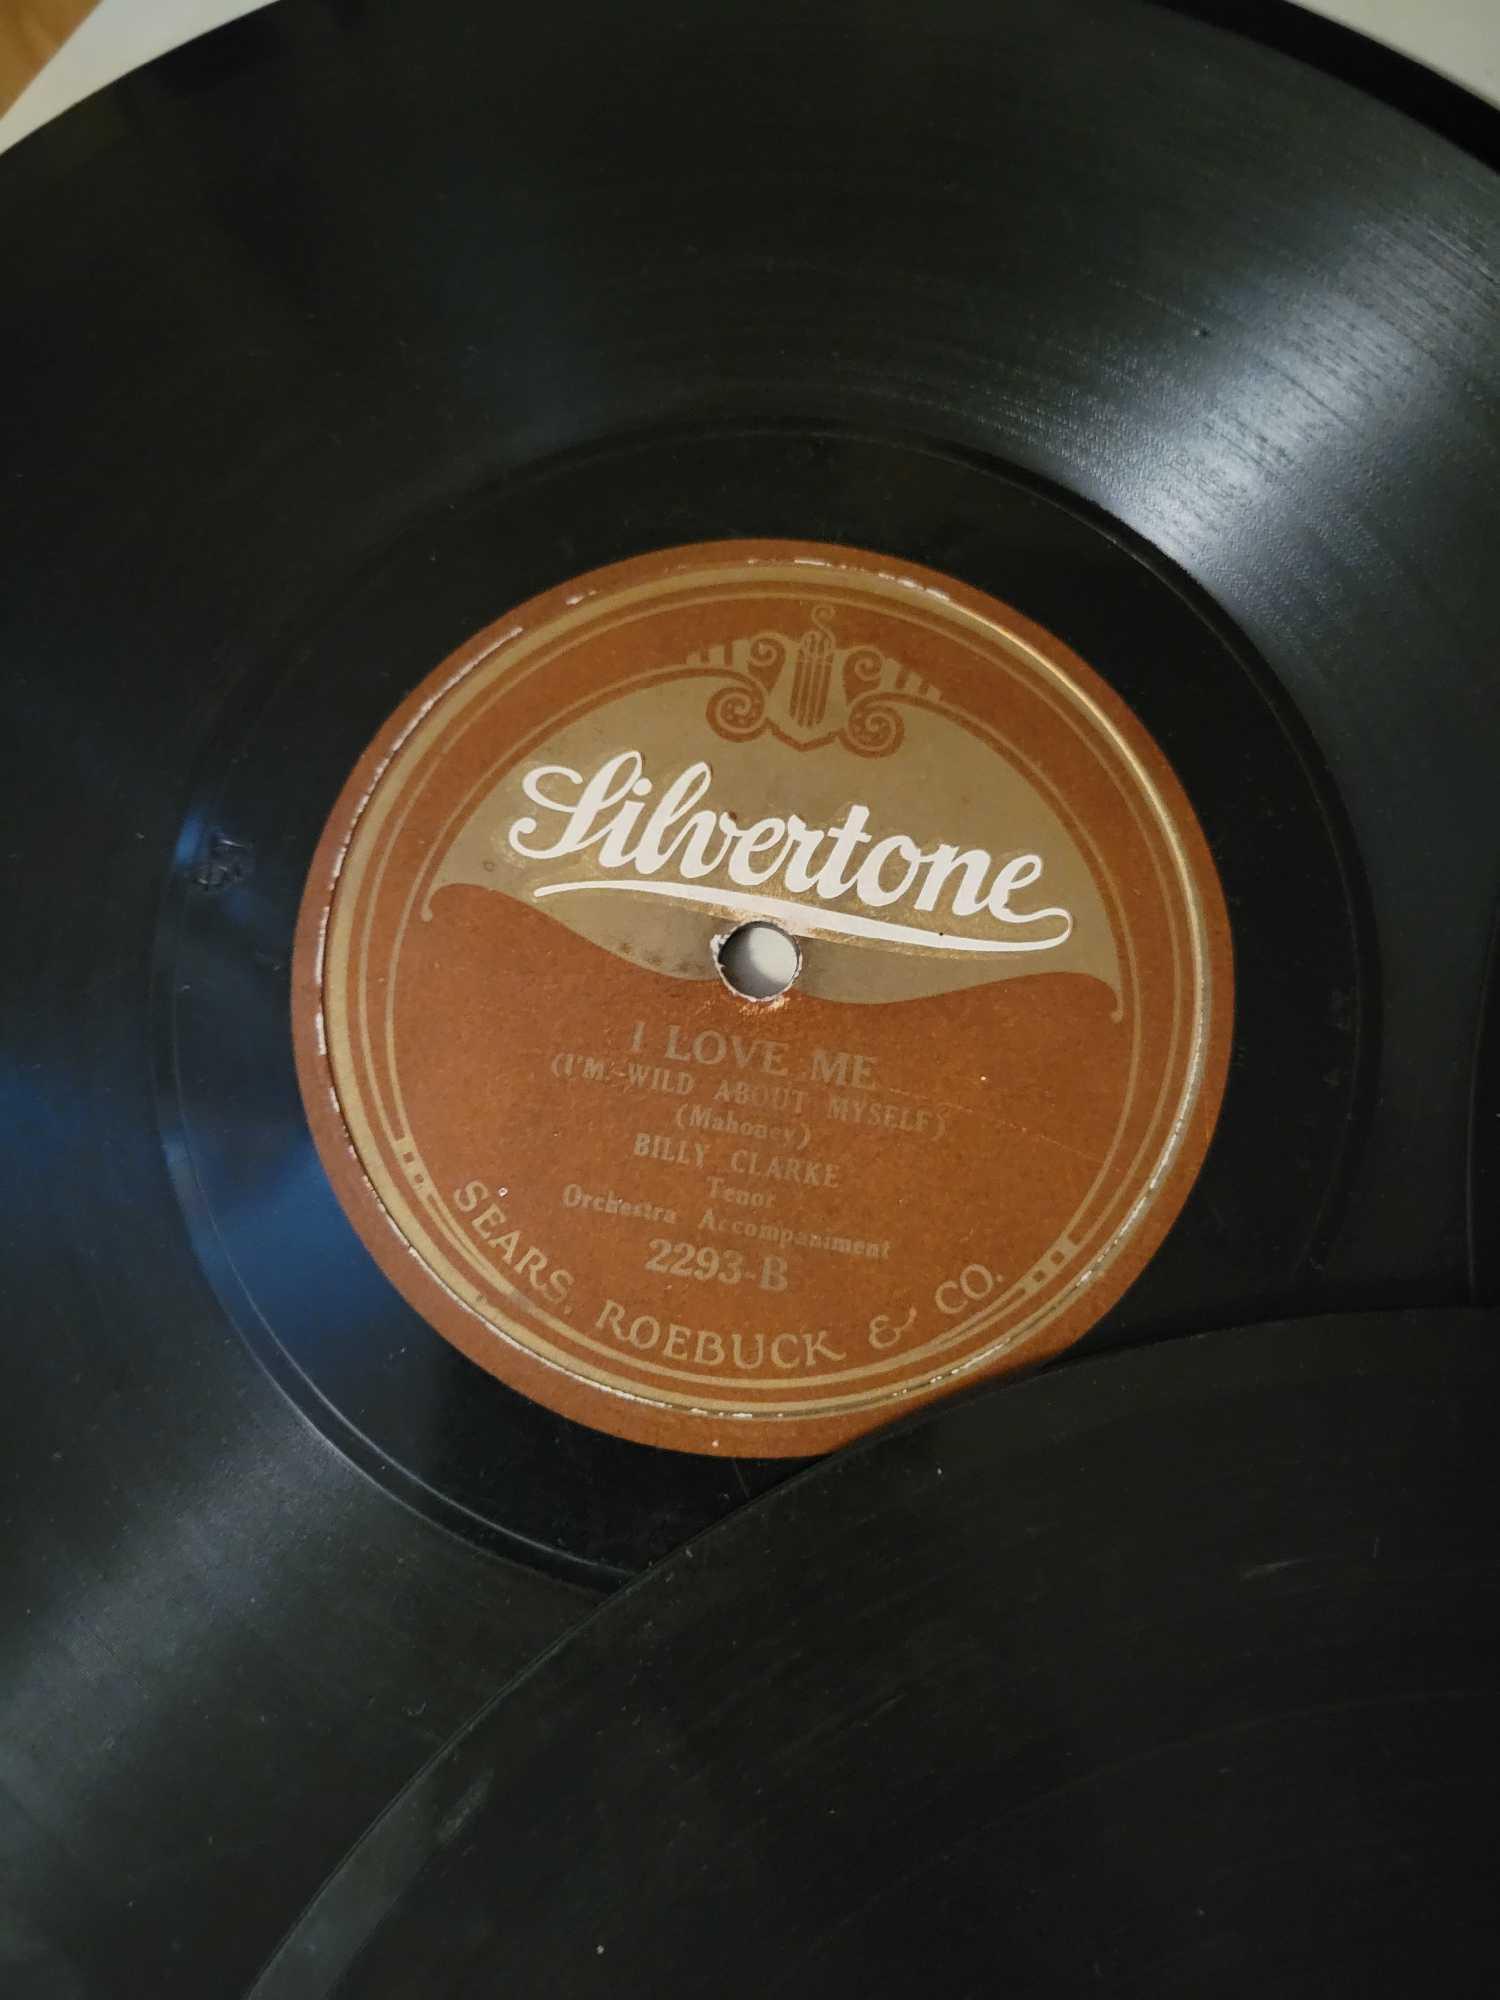 Miscellaneous Vintage Records (12)